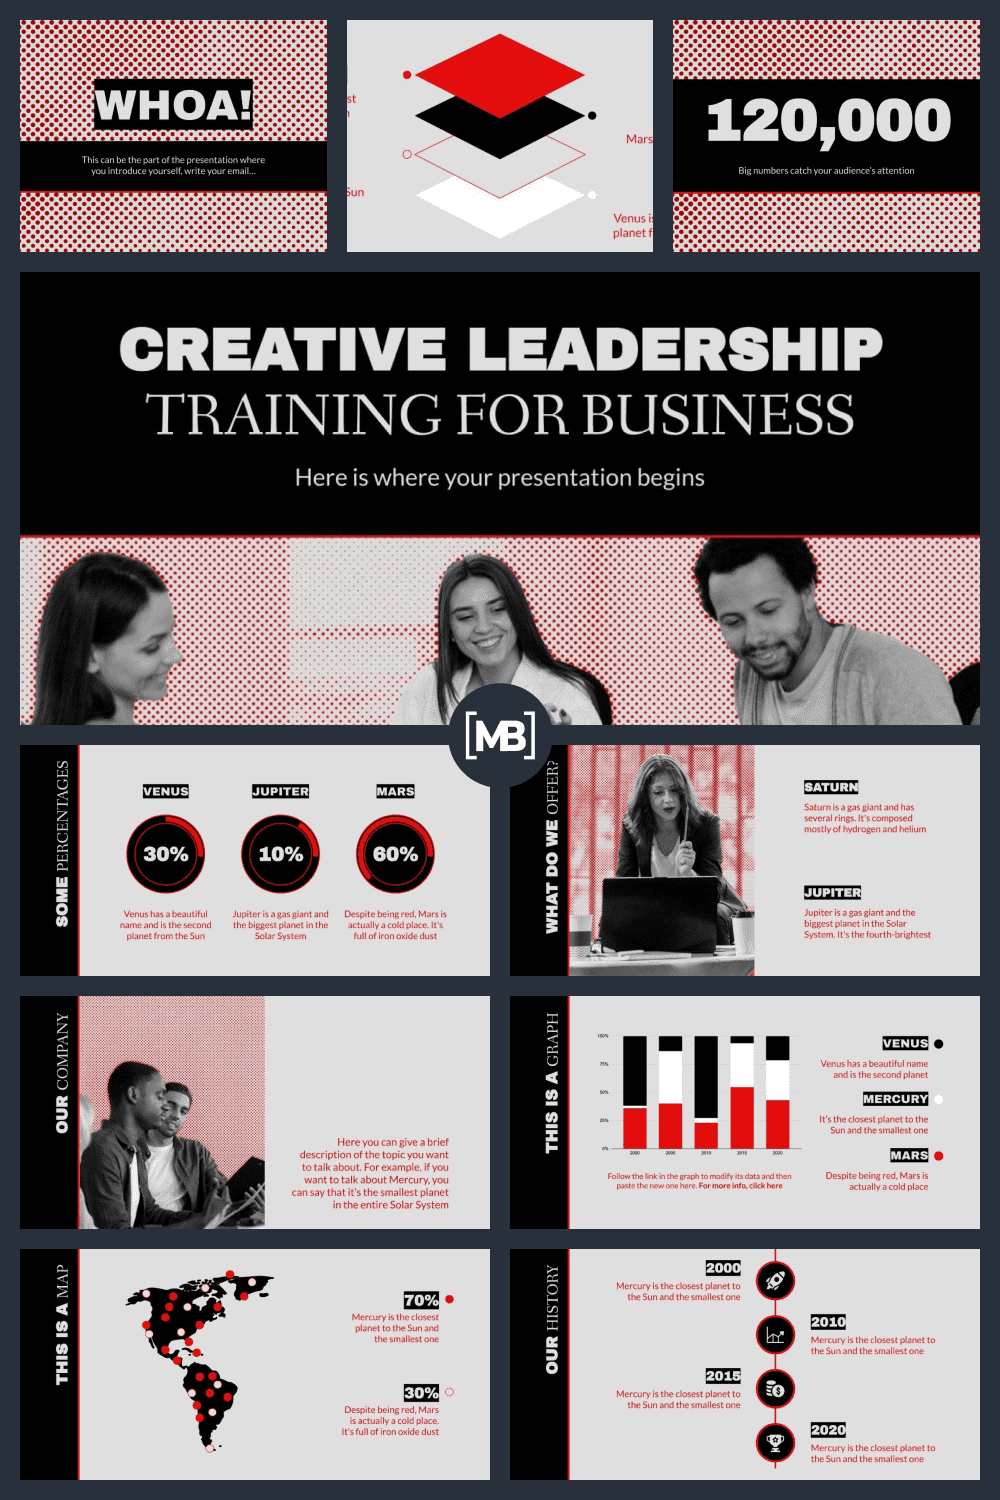 Creative leadership training for business.